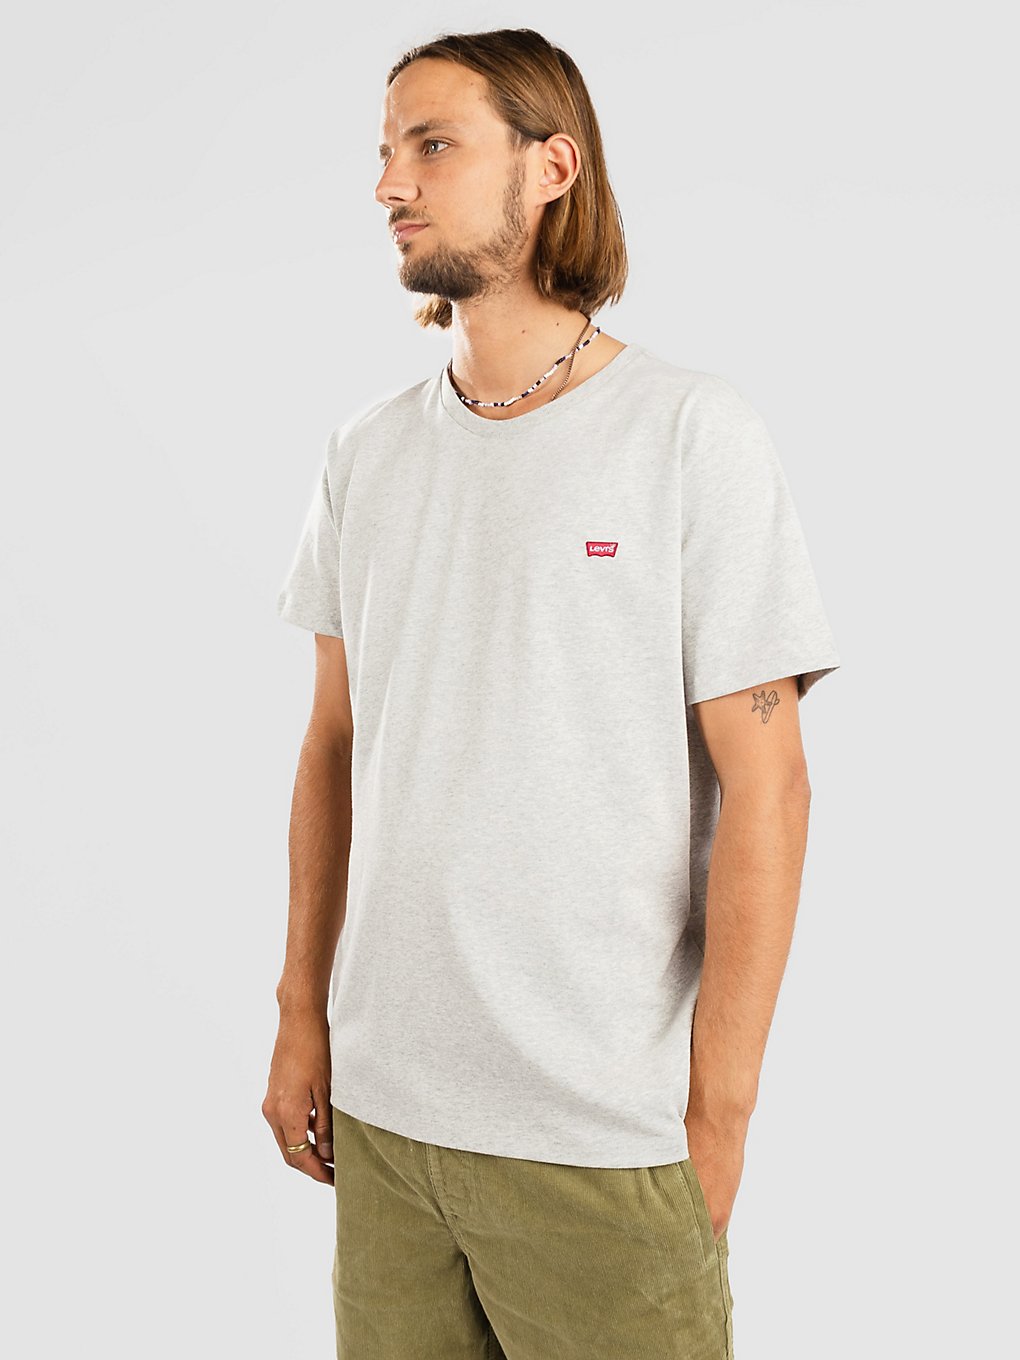 Levi's Original Hm T-Shirt grey kaufen